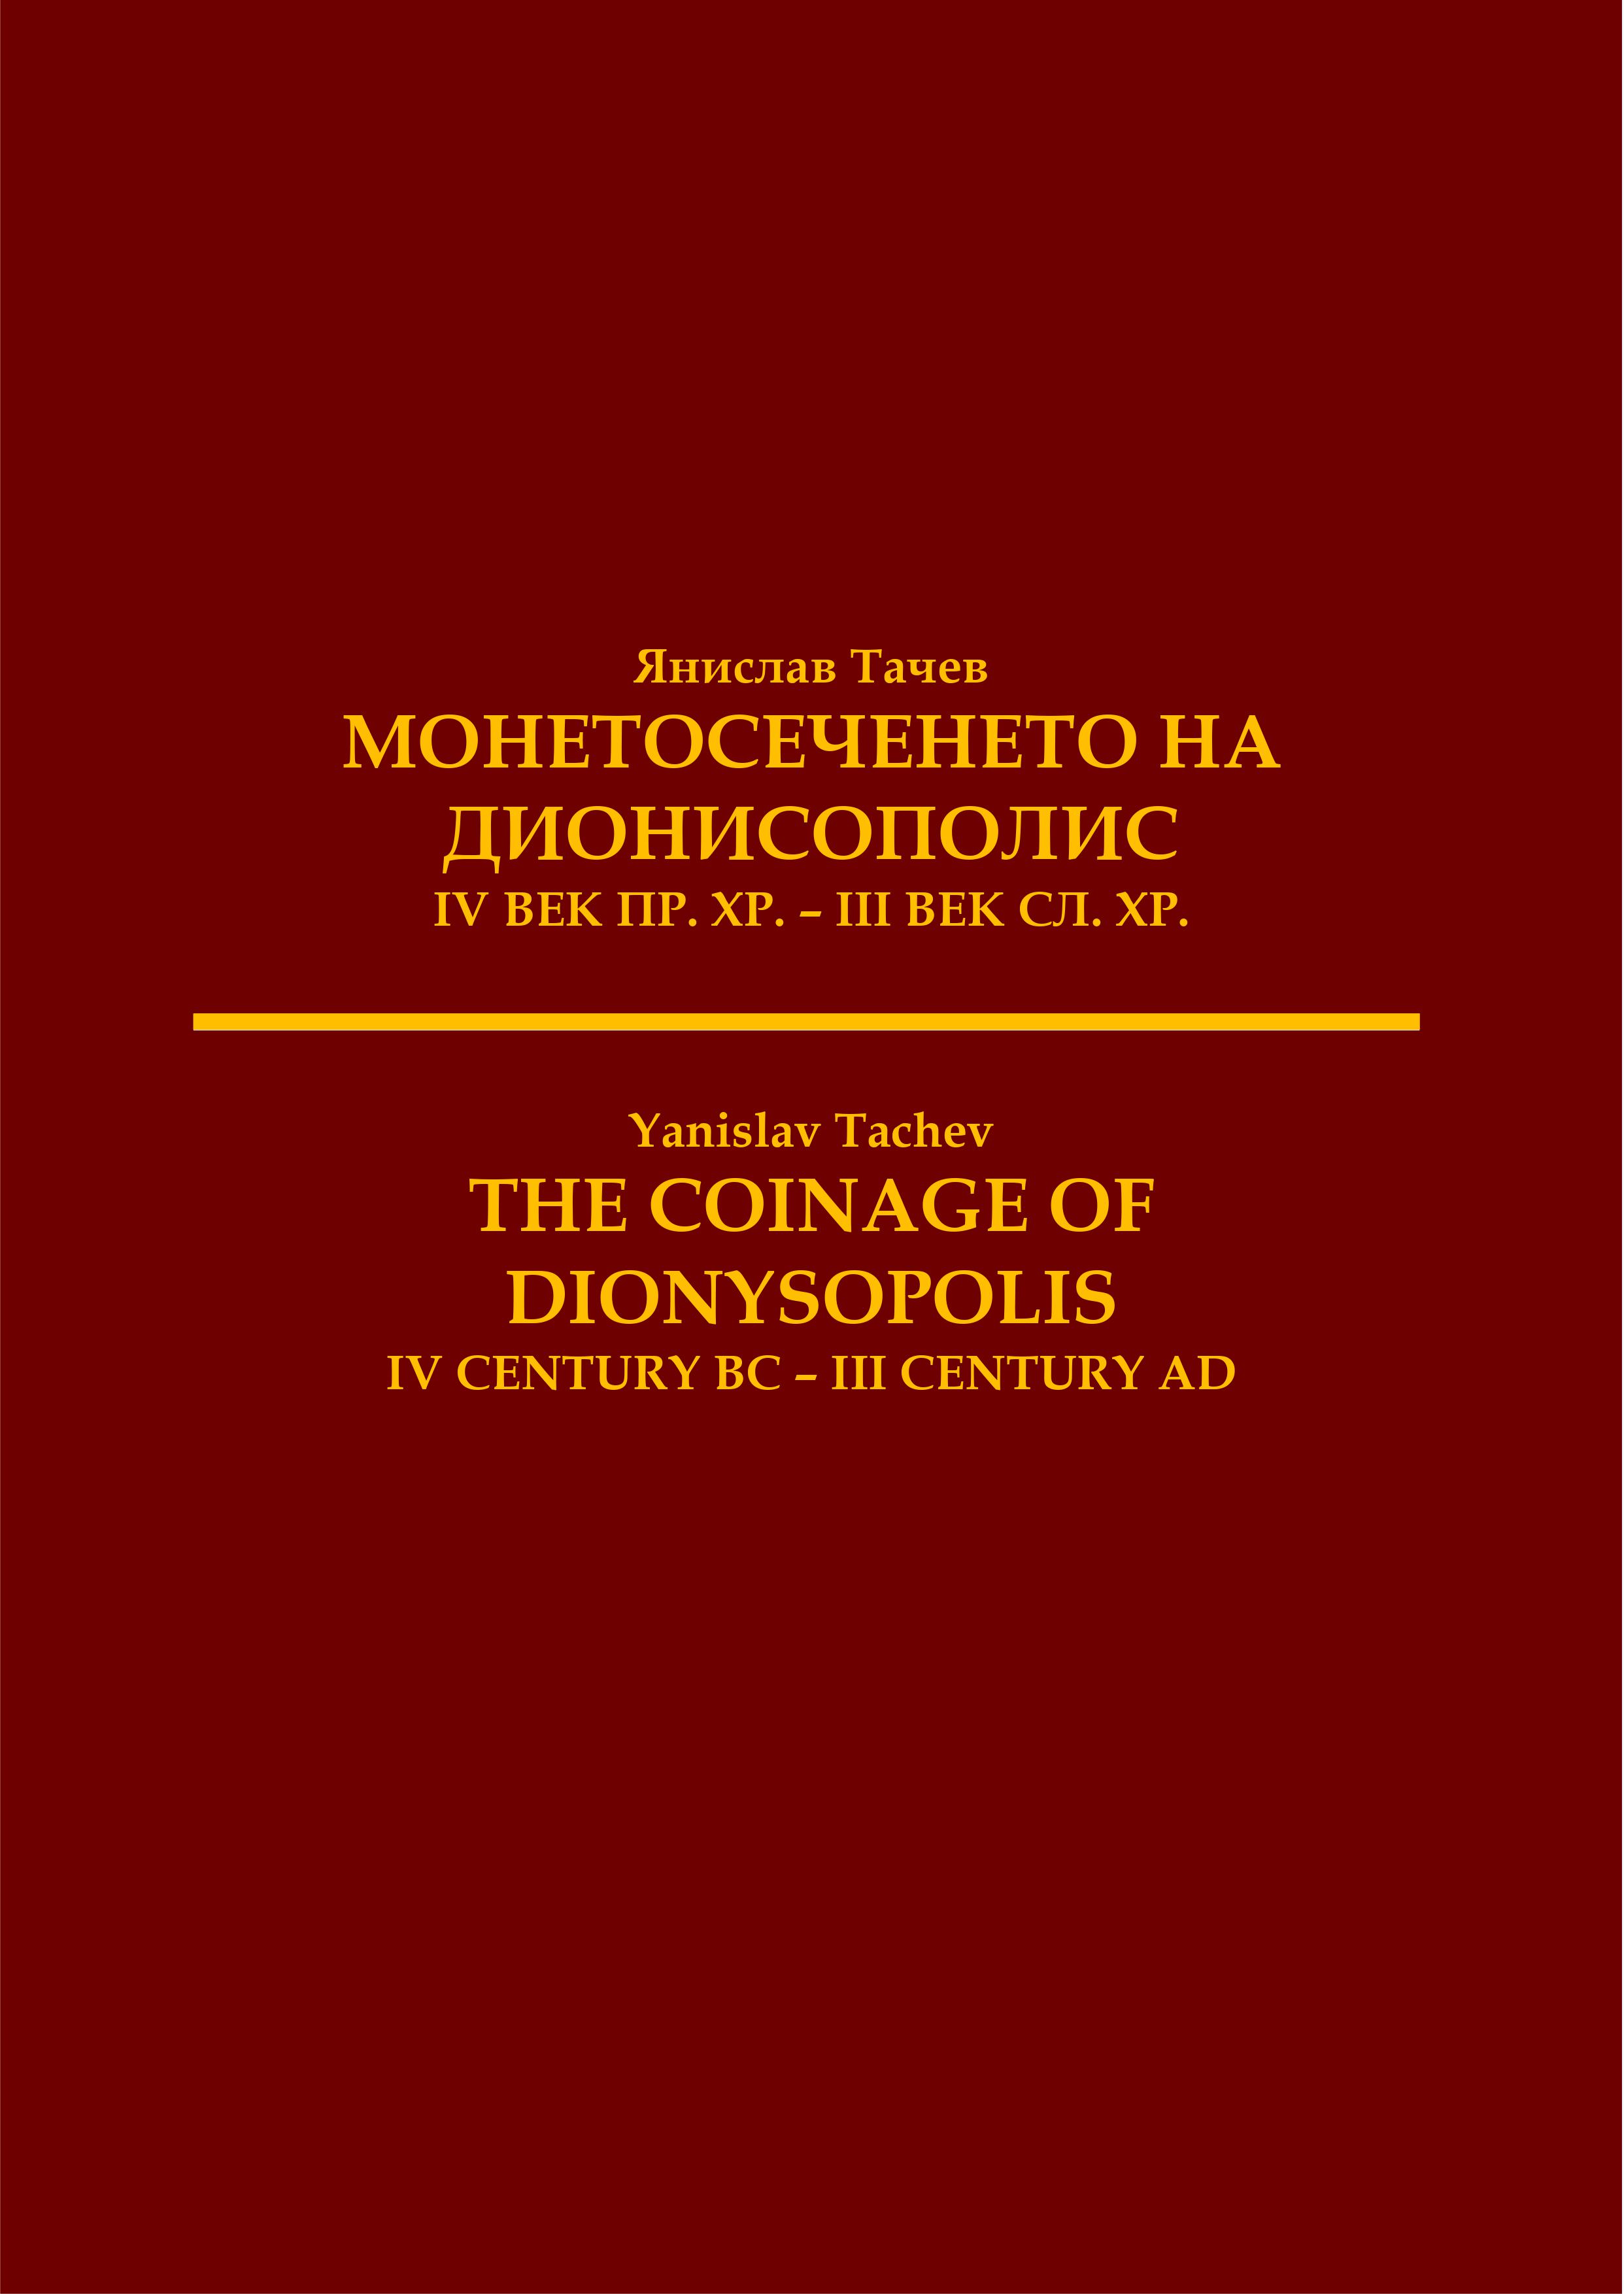 Tachev, Yanislav : The Coinage of Dionysopolis. 4th century BC – 3rd century AD